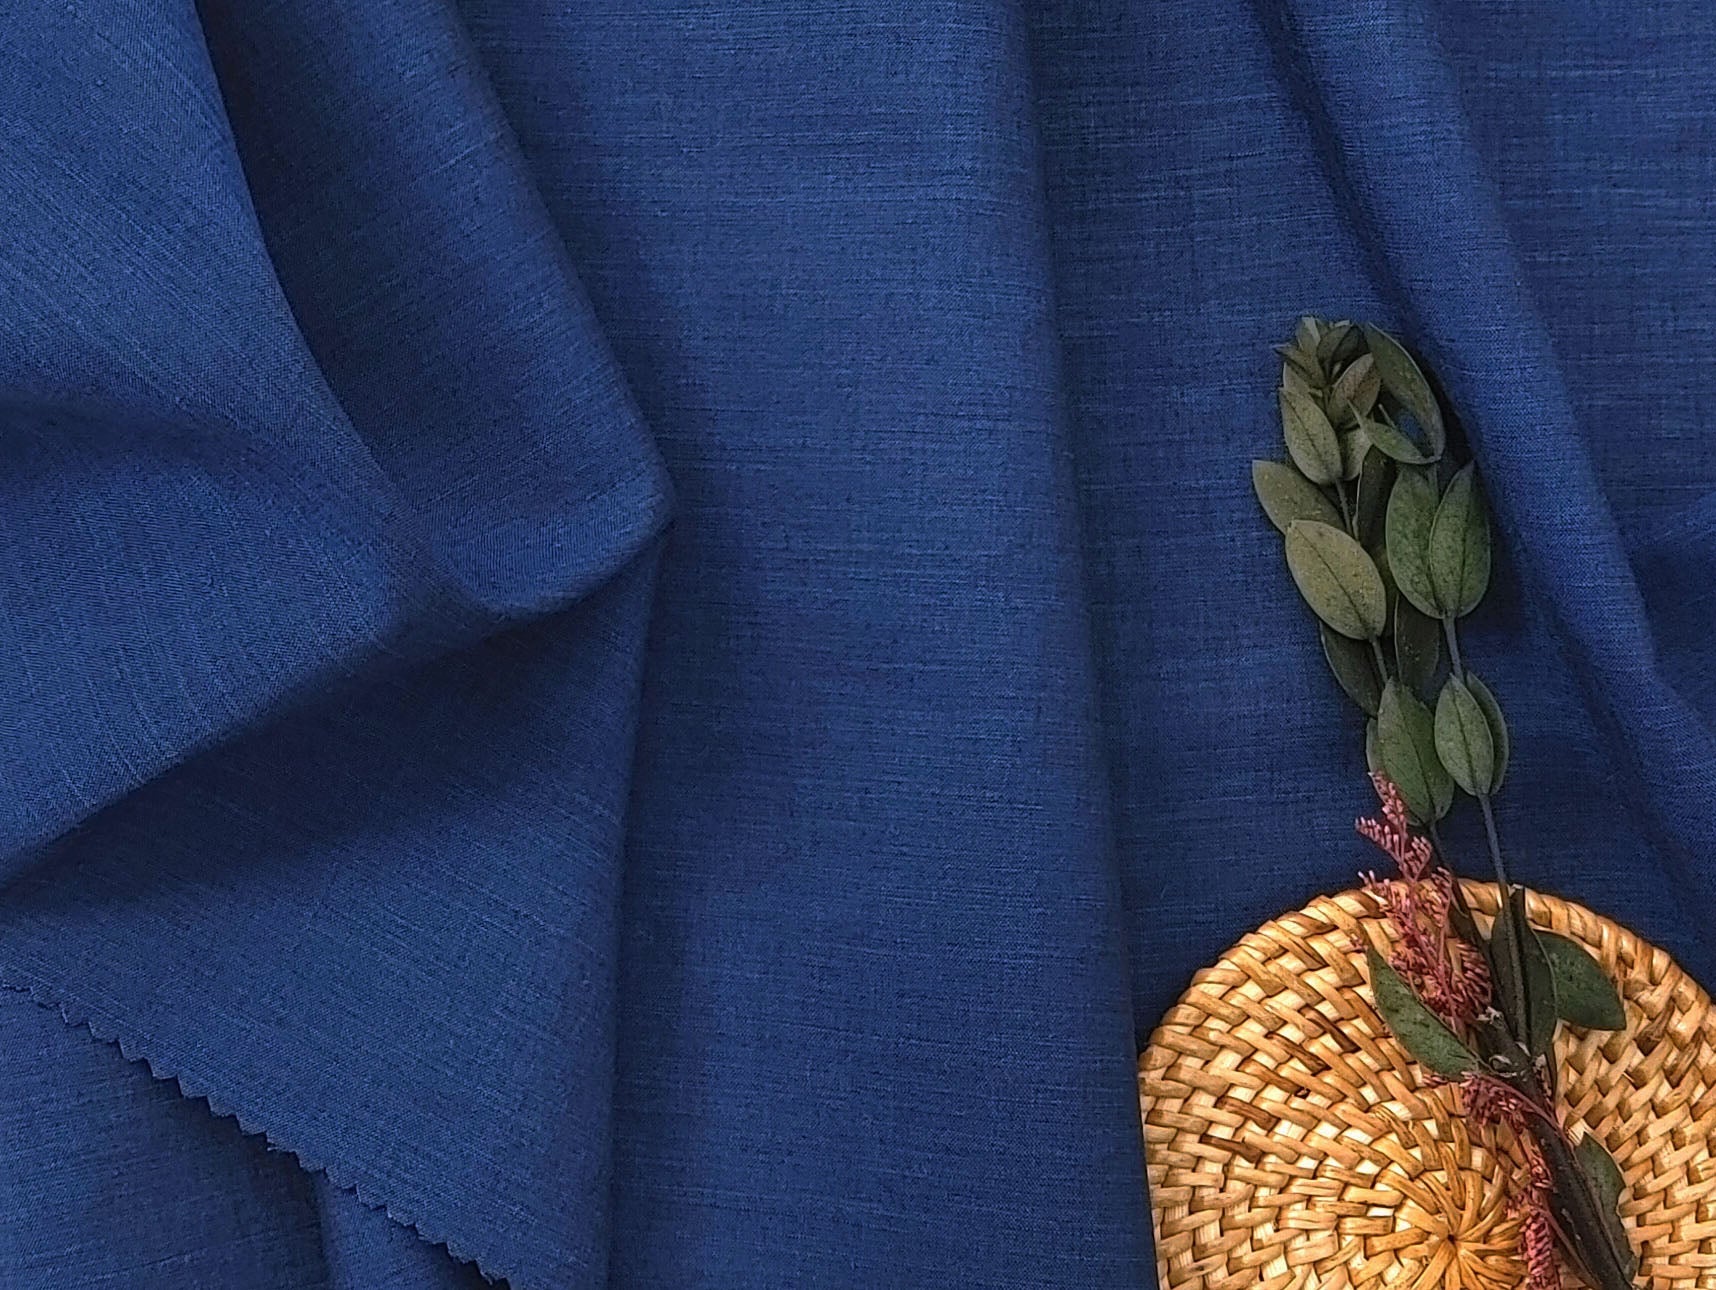 Midnight Blue Elegance: Lightweight Linen Cotton Chambray Fabric 4933 - The Linen Lab - Navy